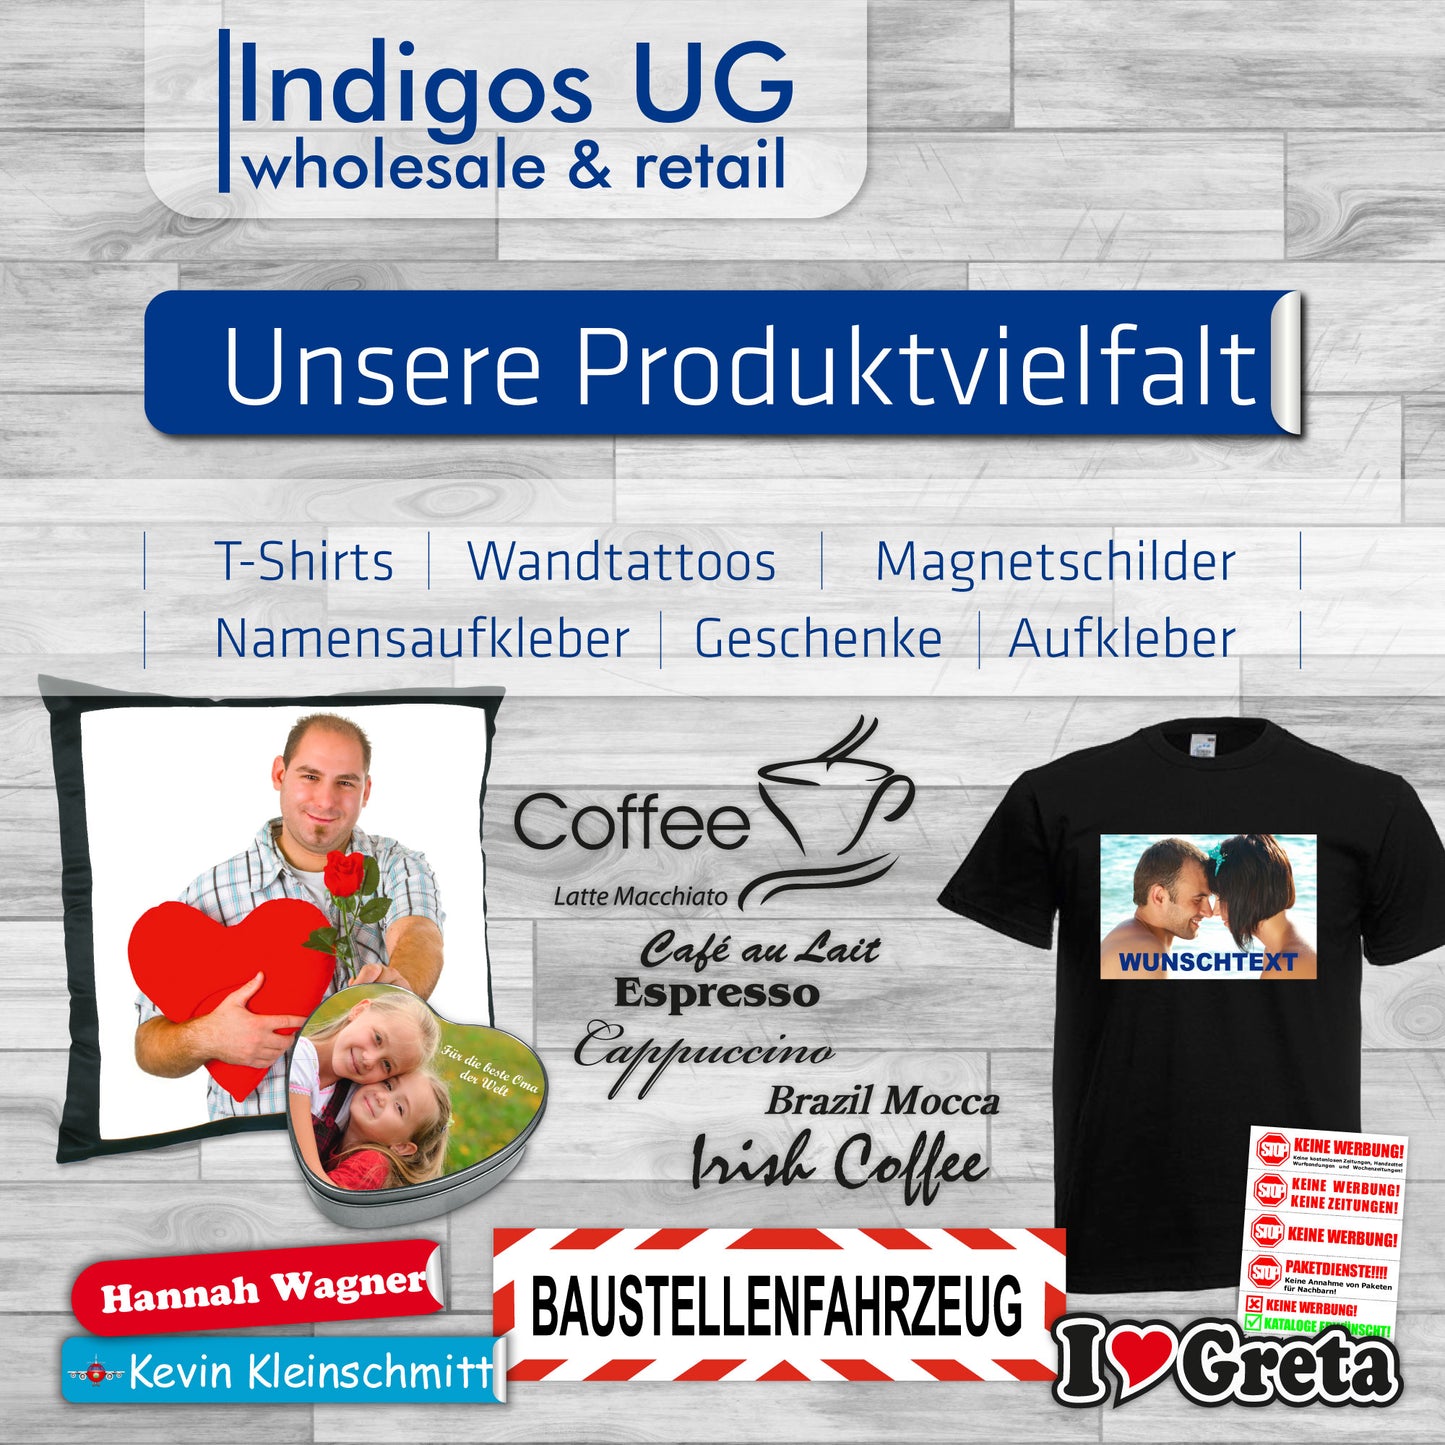 INDIGOS UG - T-Shirt Herren - Brasilien - Hand - Fussball